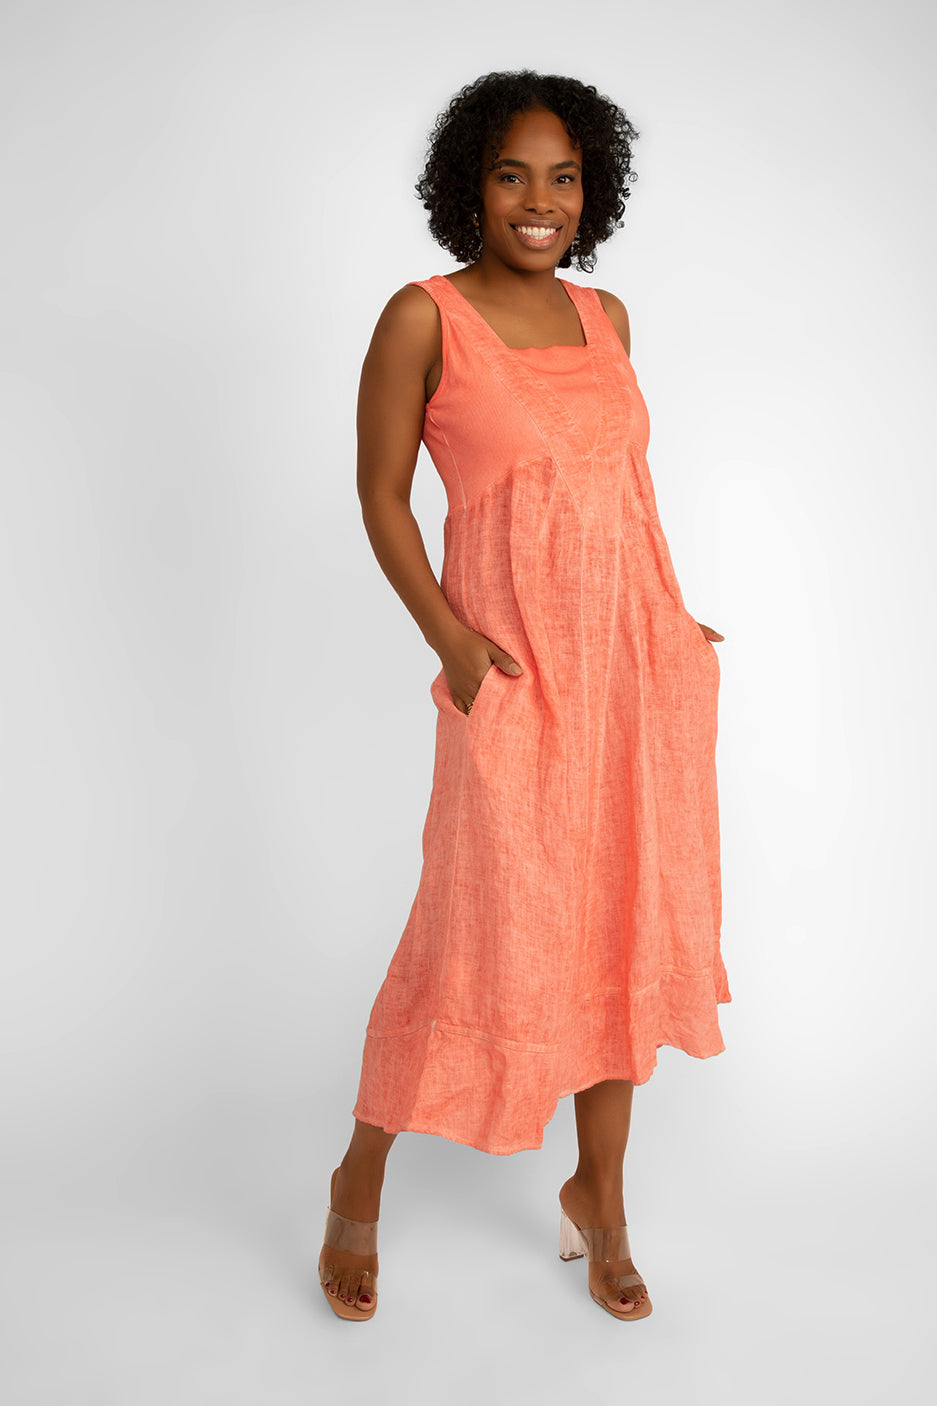 Carre Noir (6807) Sleeveless Square Neck Garment Dye Linen Dress in Coral